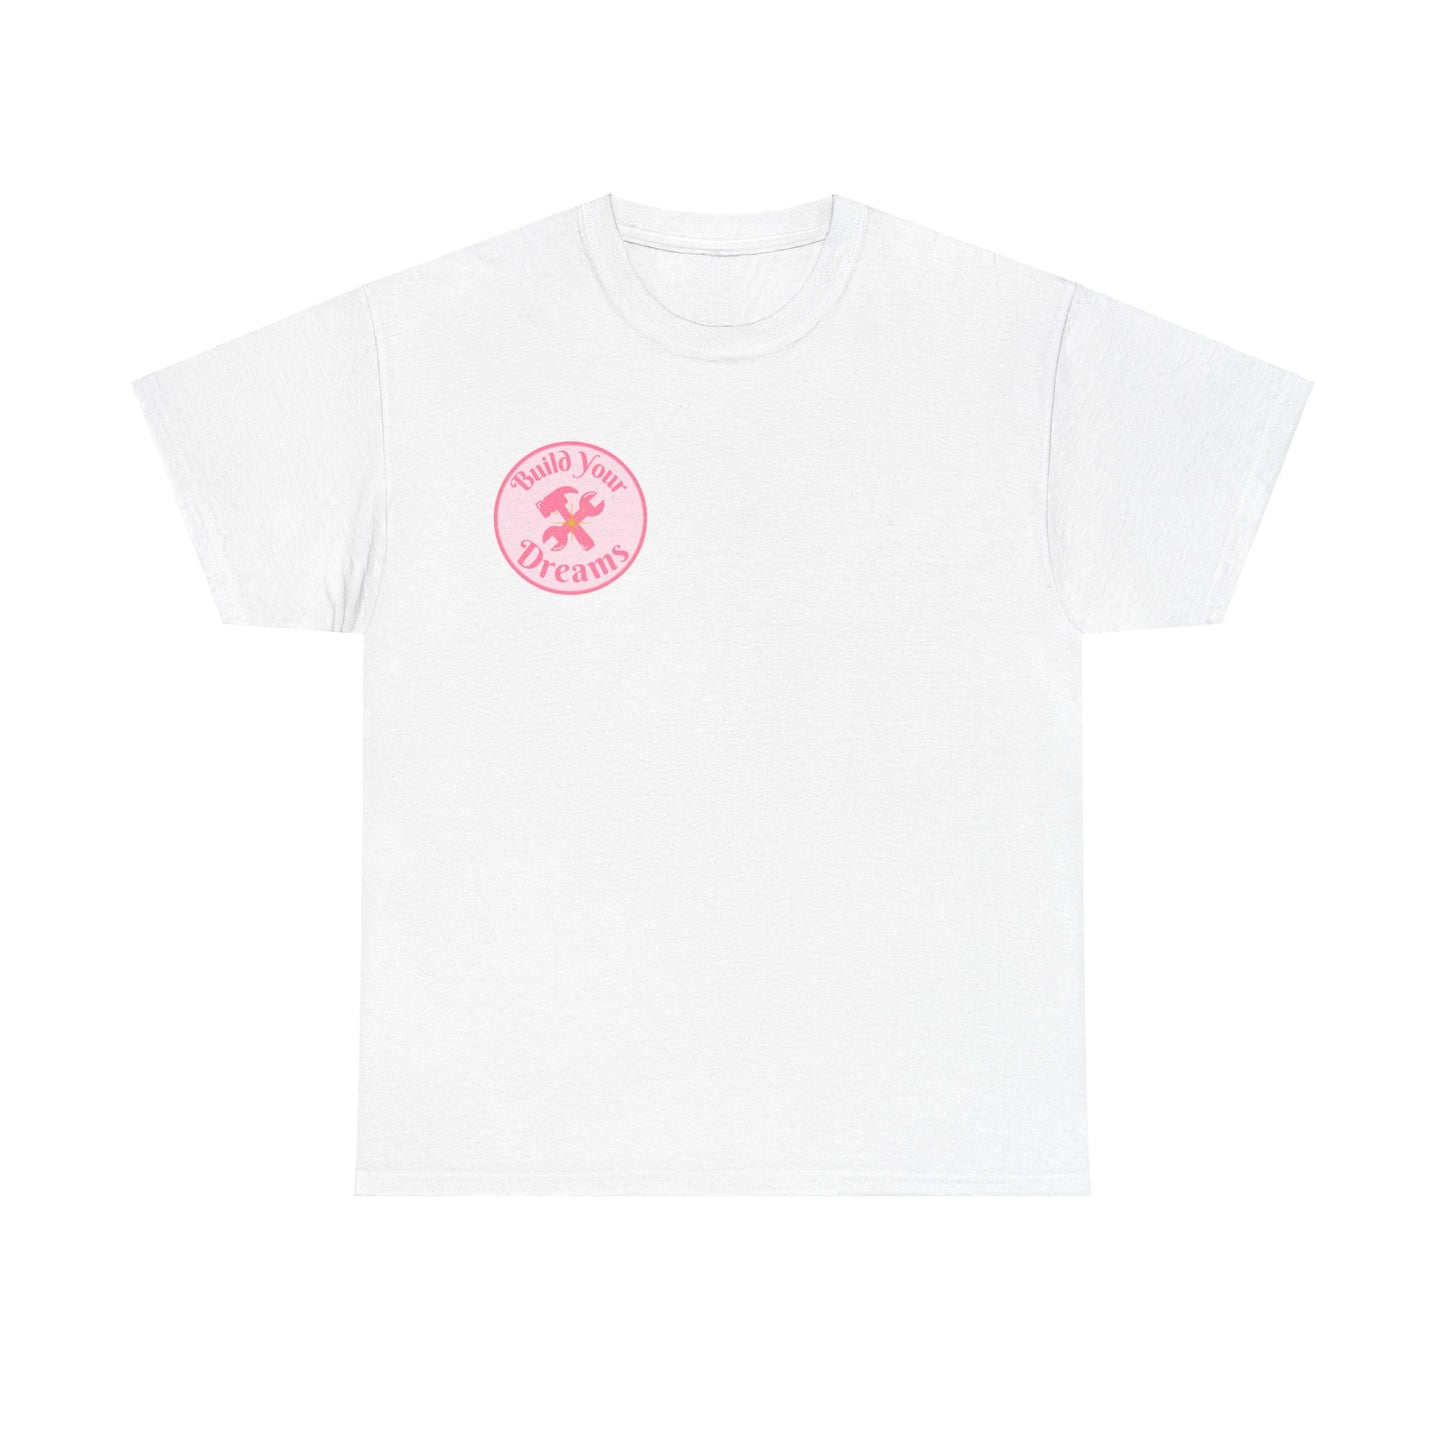 Pink Dreams Cottage Adult T-Shirt